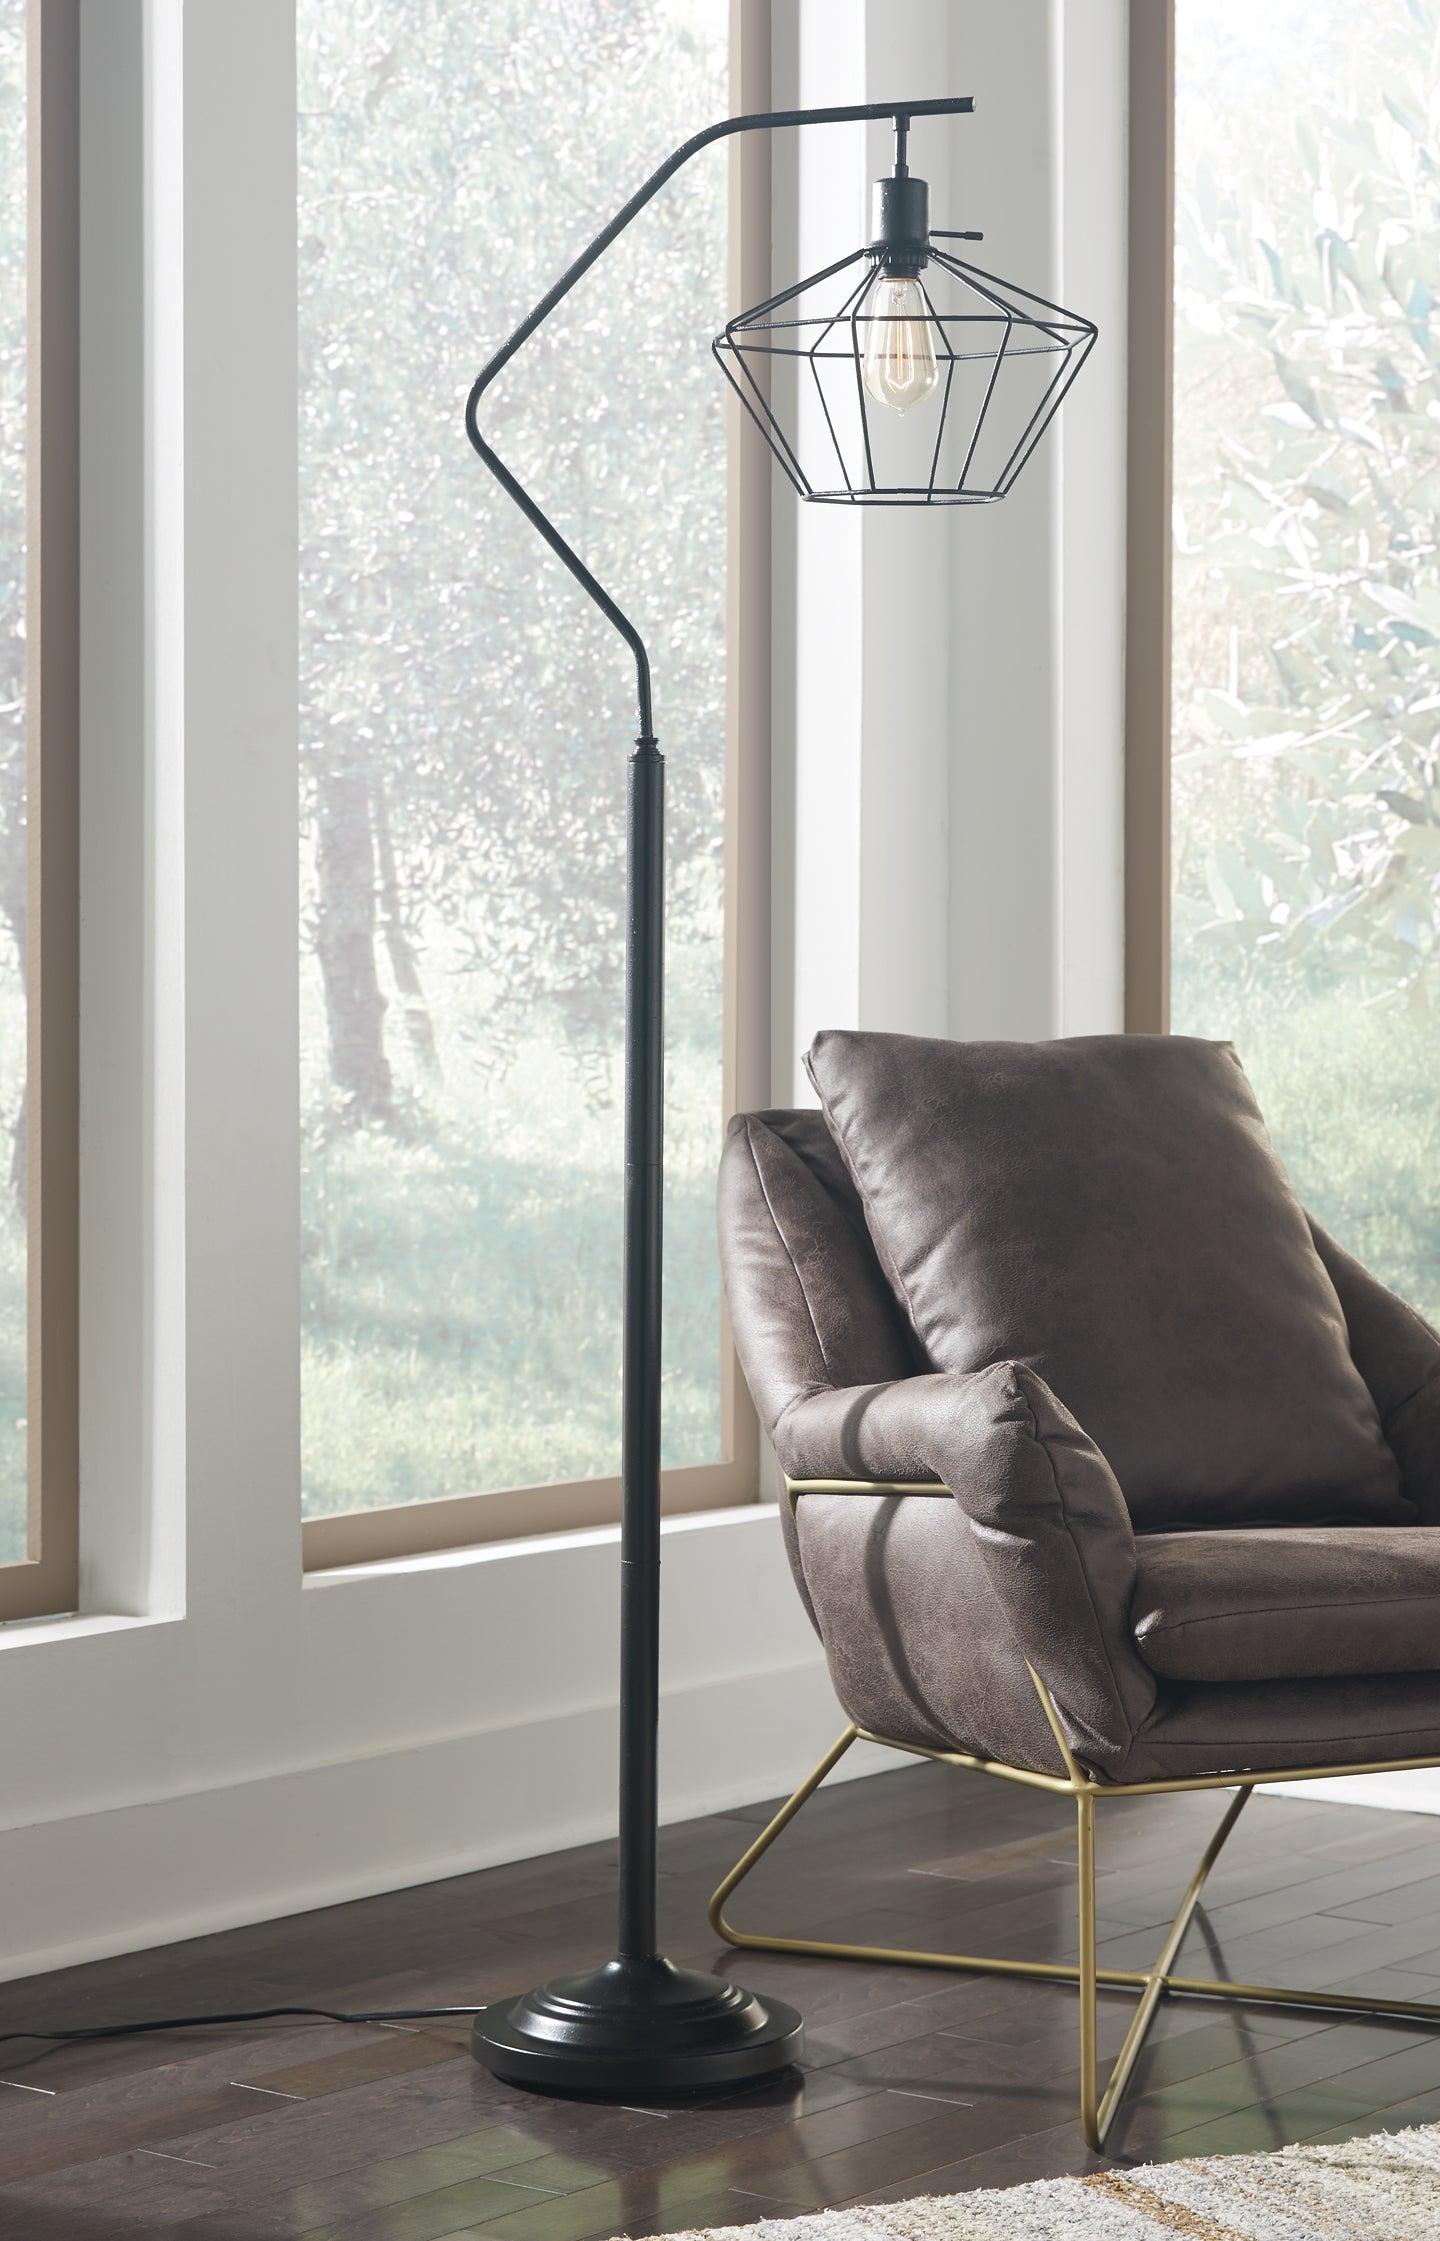 Makeika Metal Floor Lamp (1/CN) at Cloud 9 Mattress & Furniture furniture, home furnishing, home decor